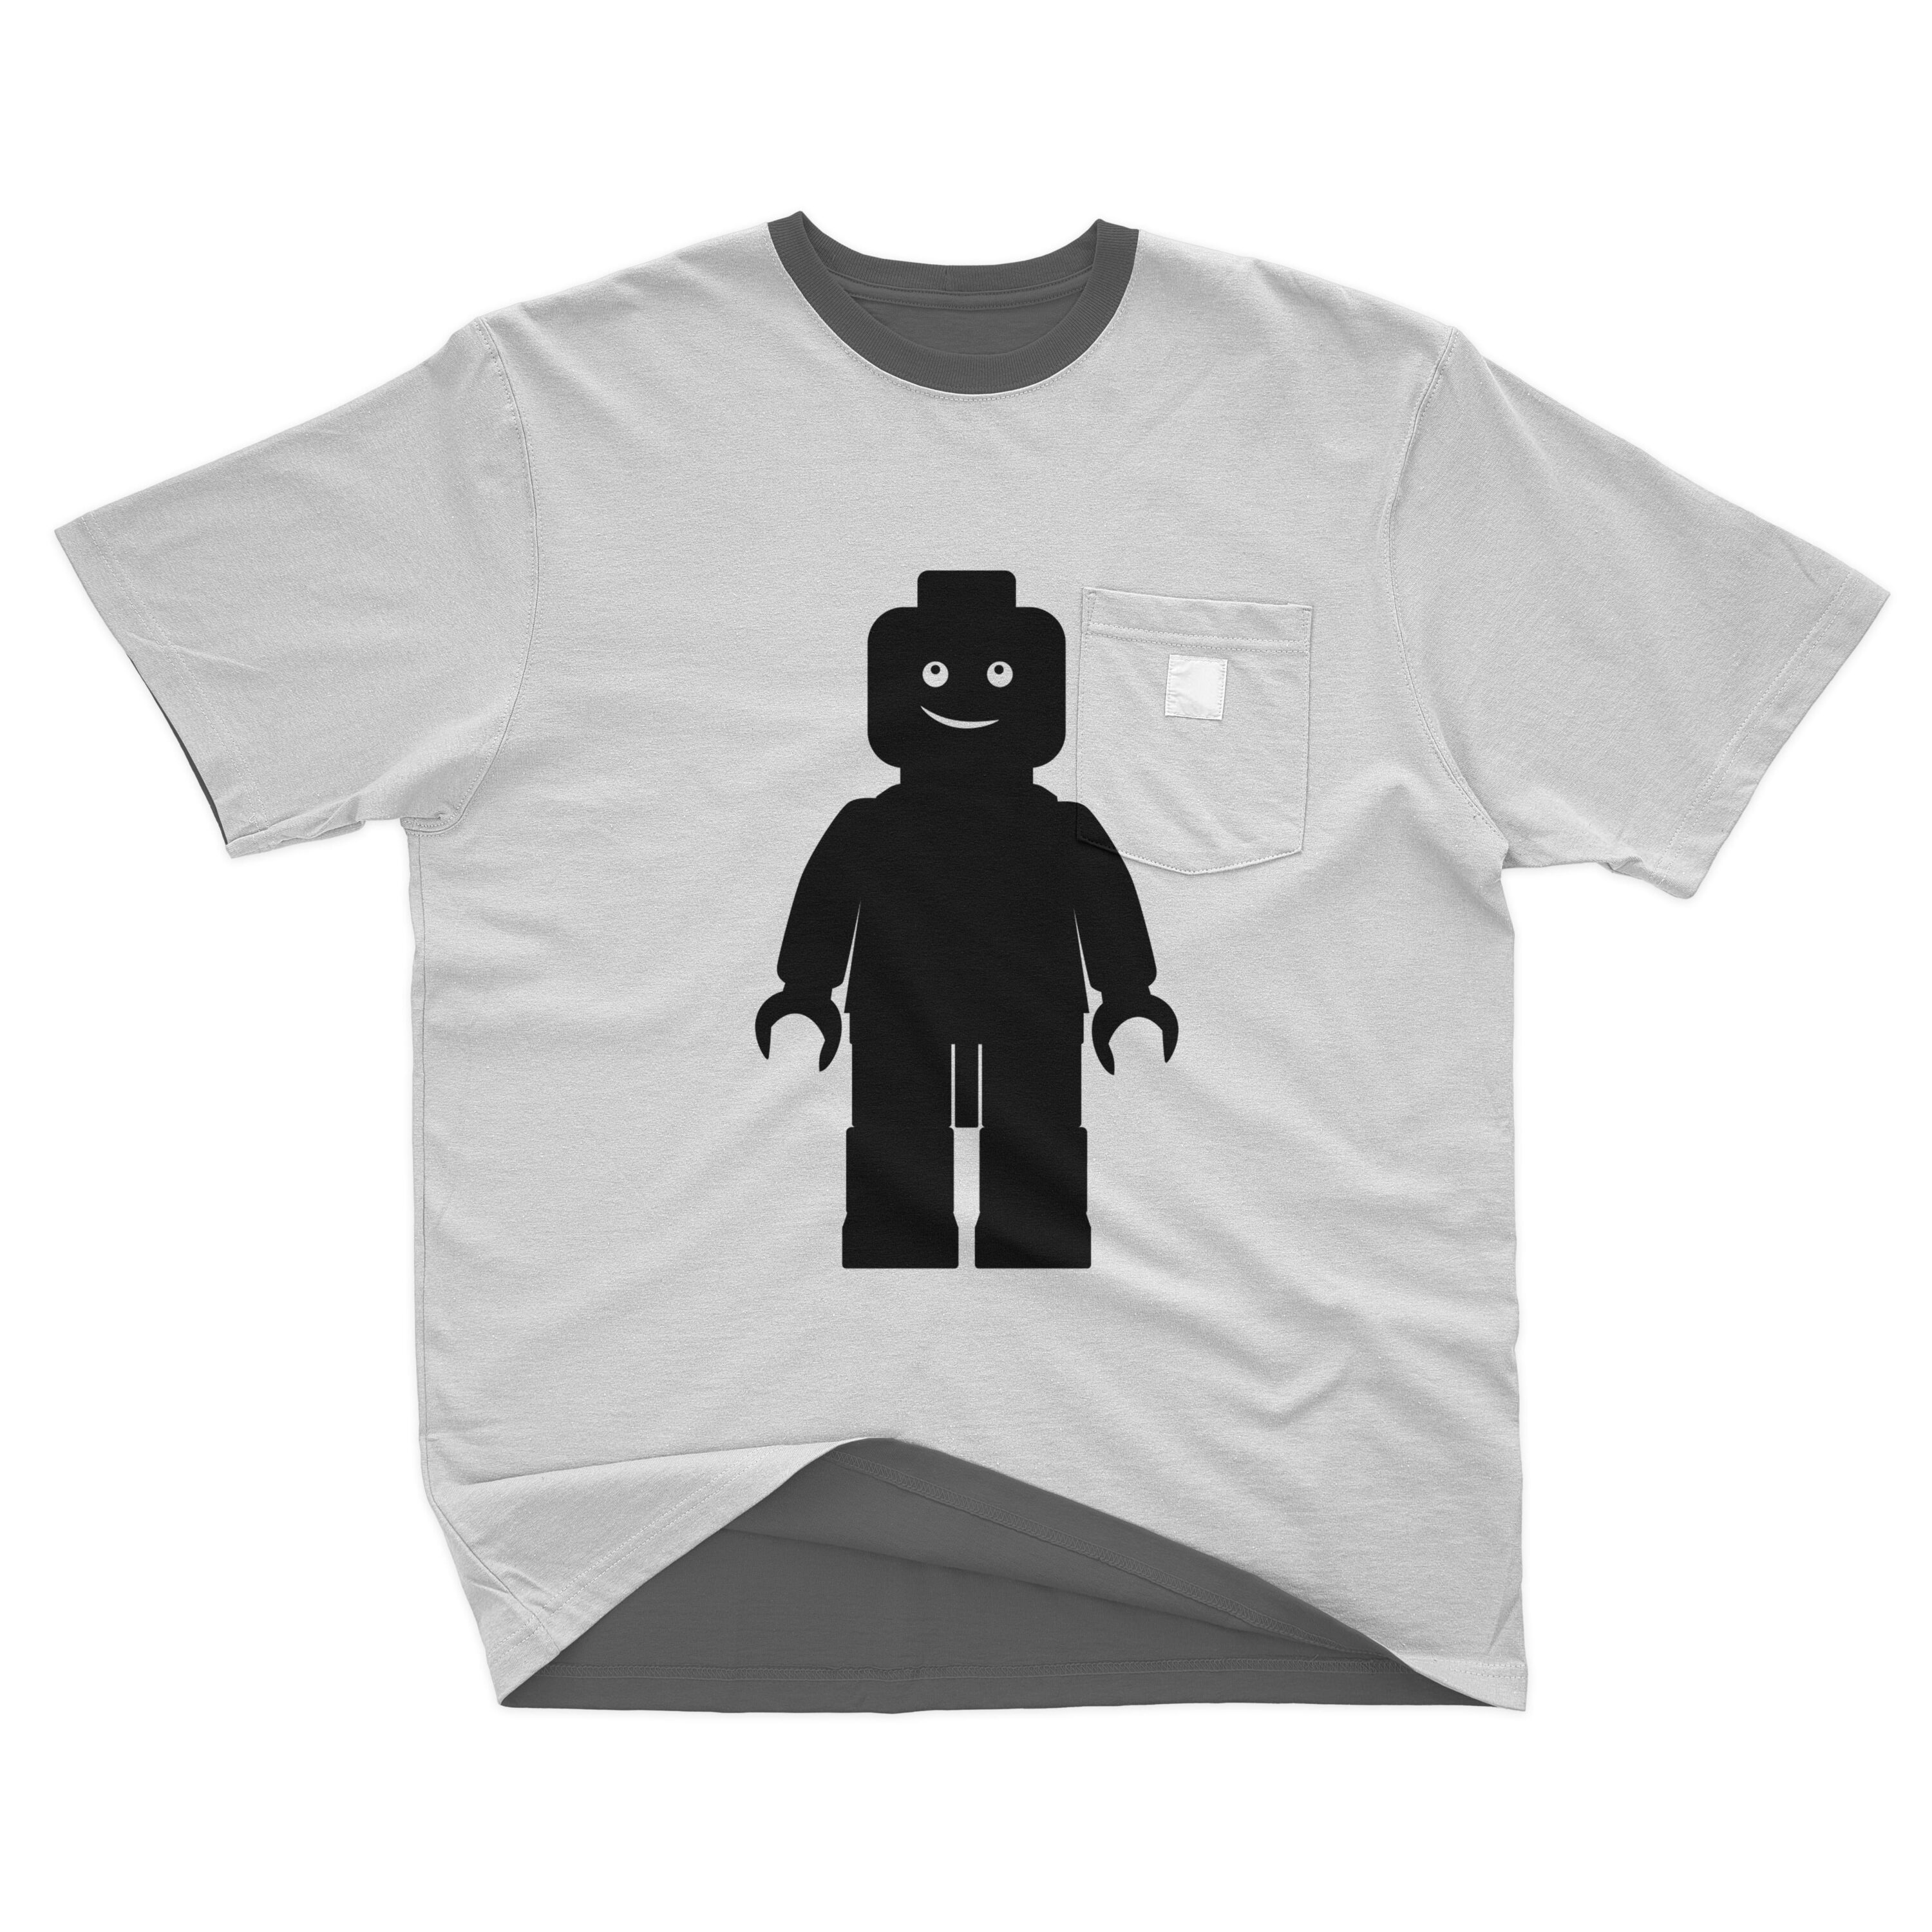 Funny t-shirt design for kids.